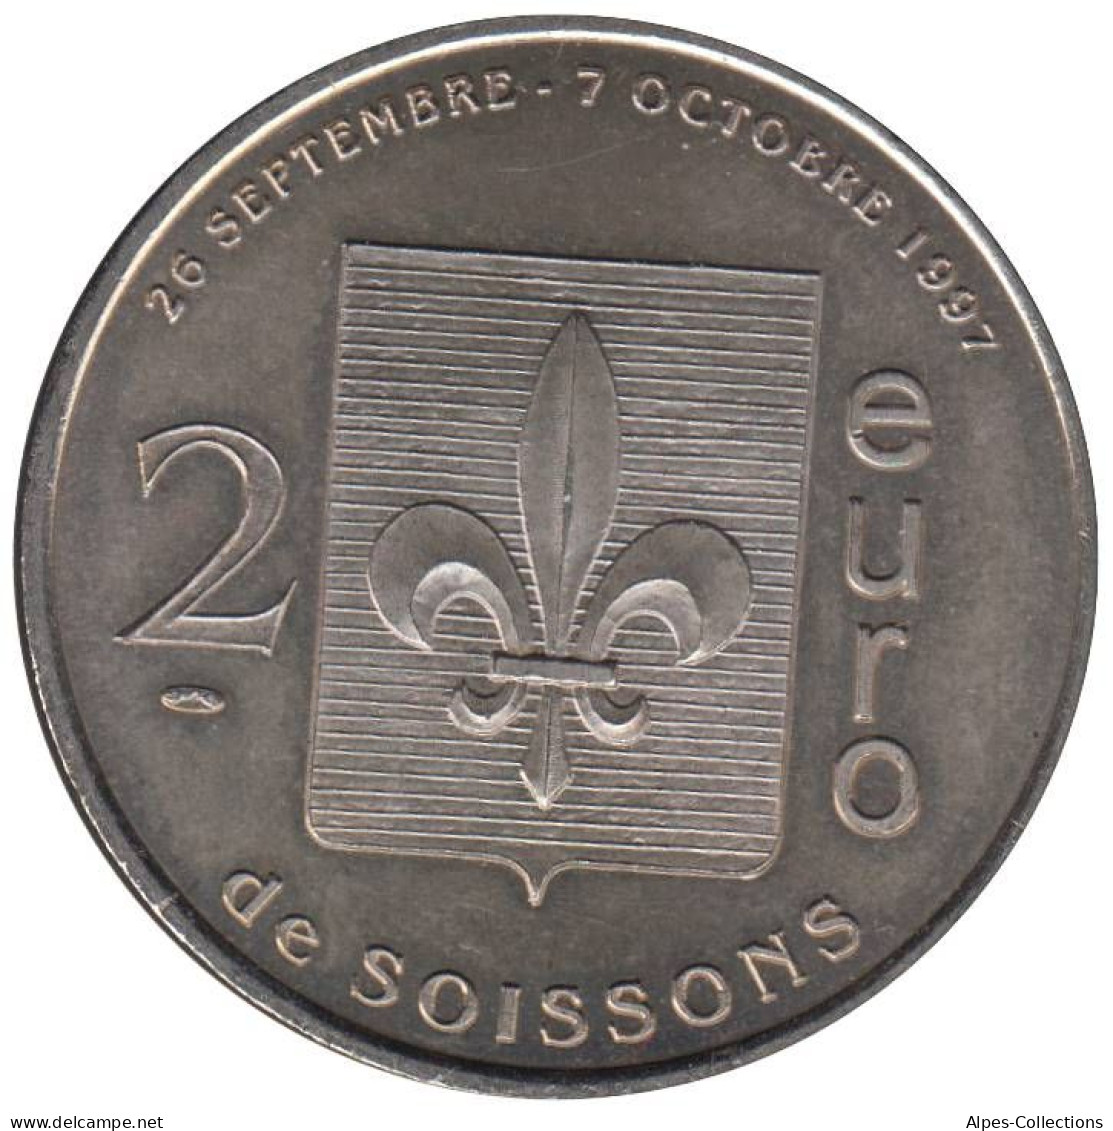 SOISSONS - EU0020.1 - 2 EURO DES VILLES - Réf: T392 - 1997 - Euros De Las Ciudades